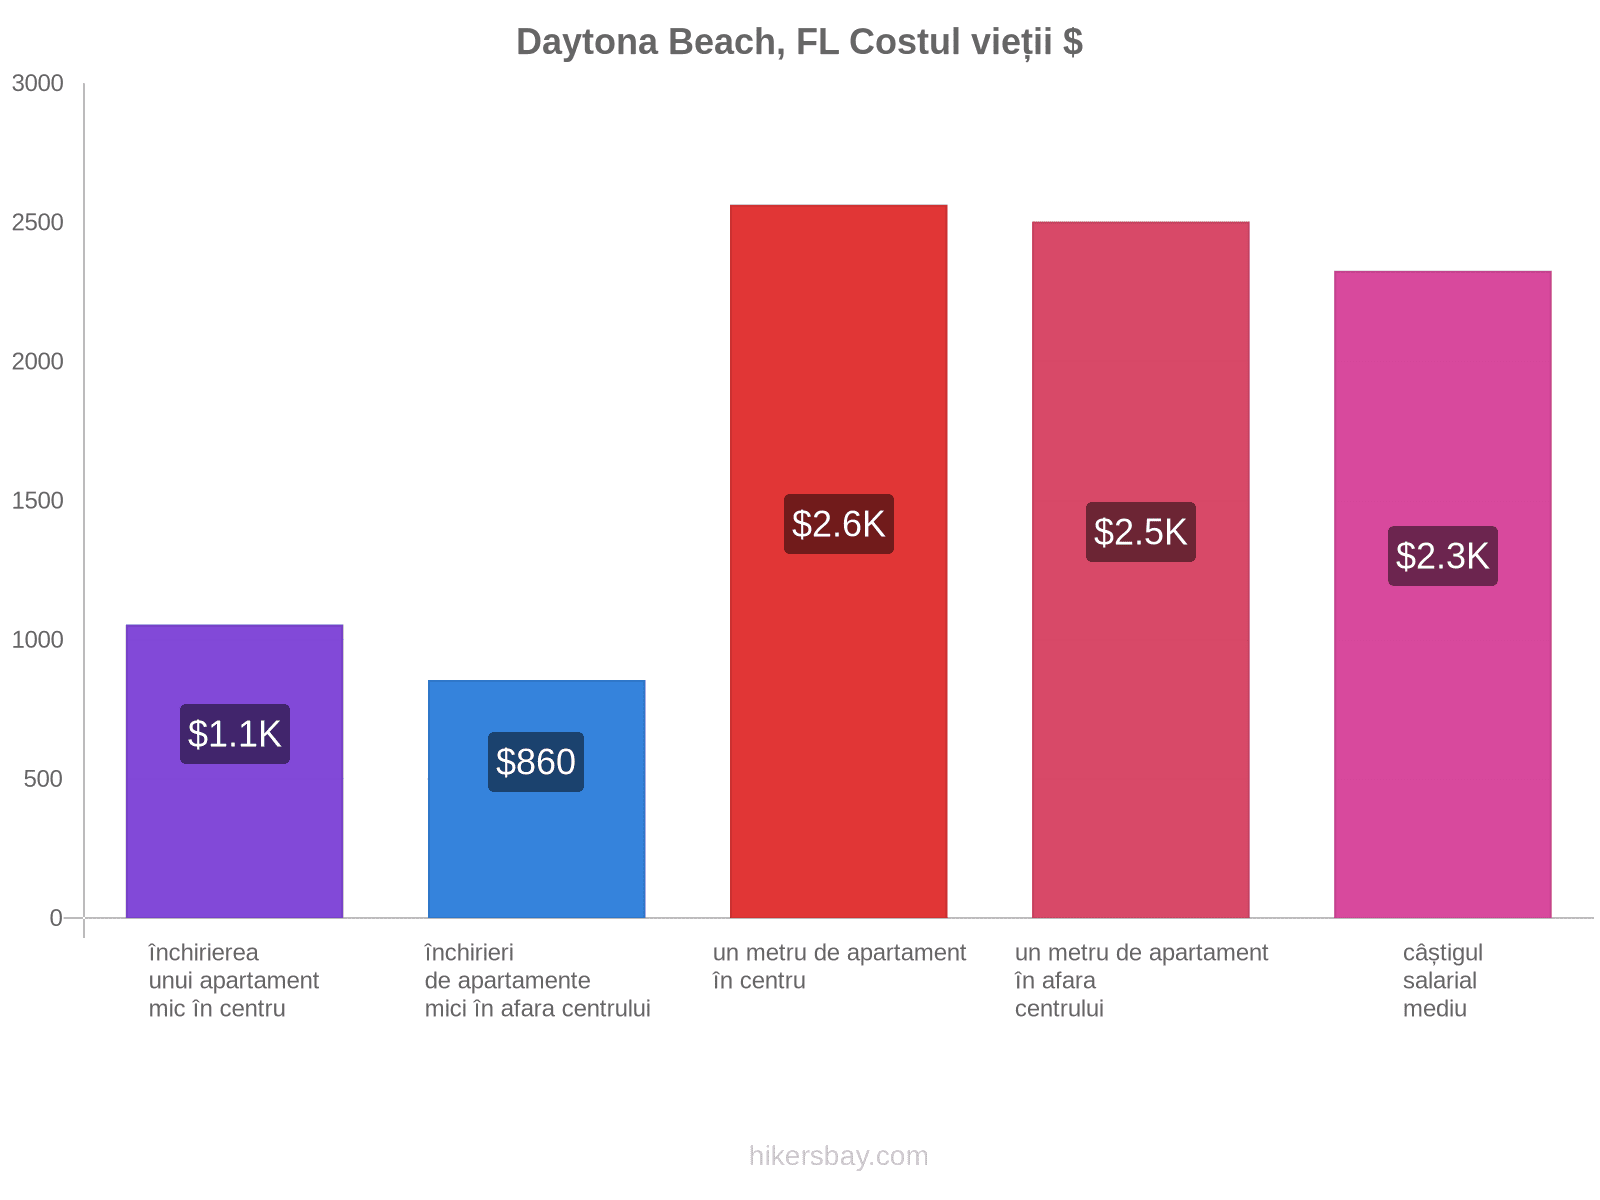 Daytona Beach, FL costul vieții hikersbay.com